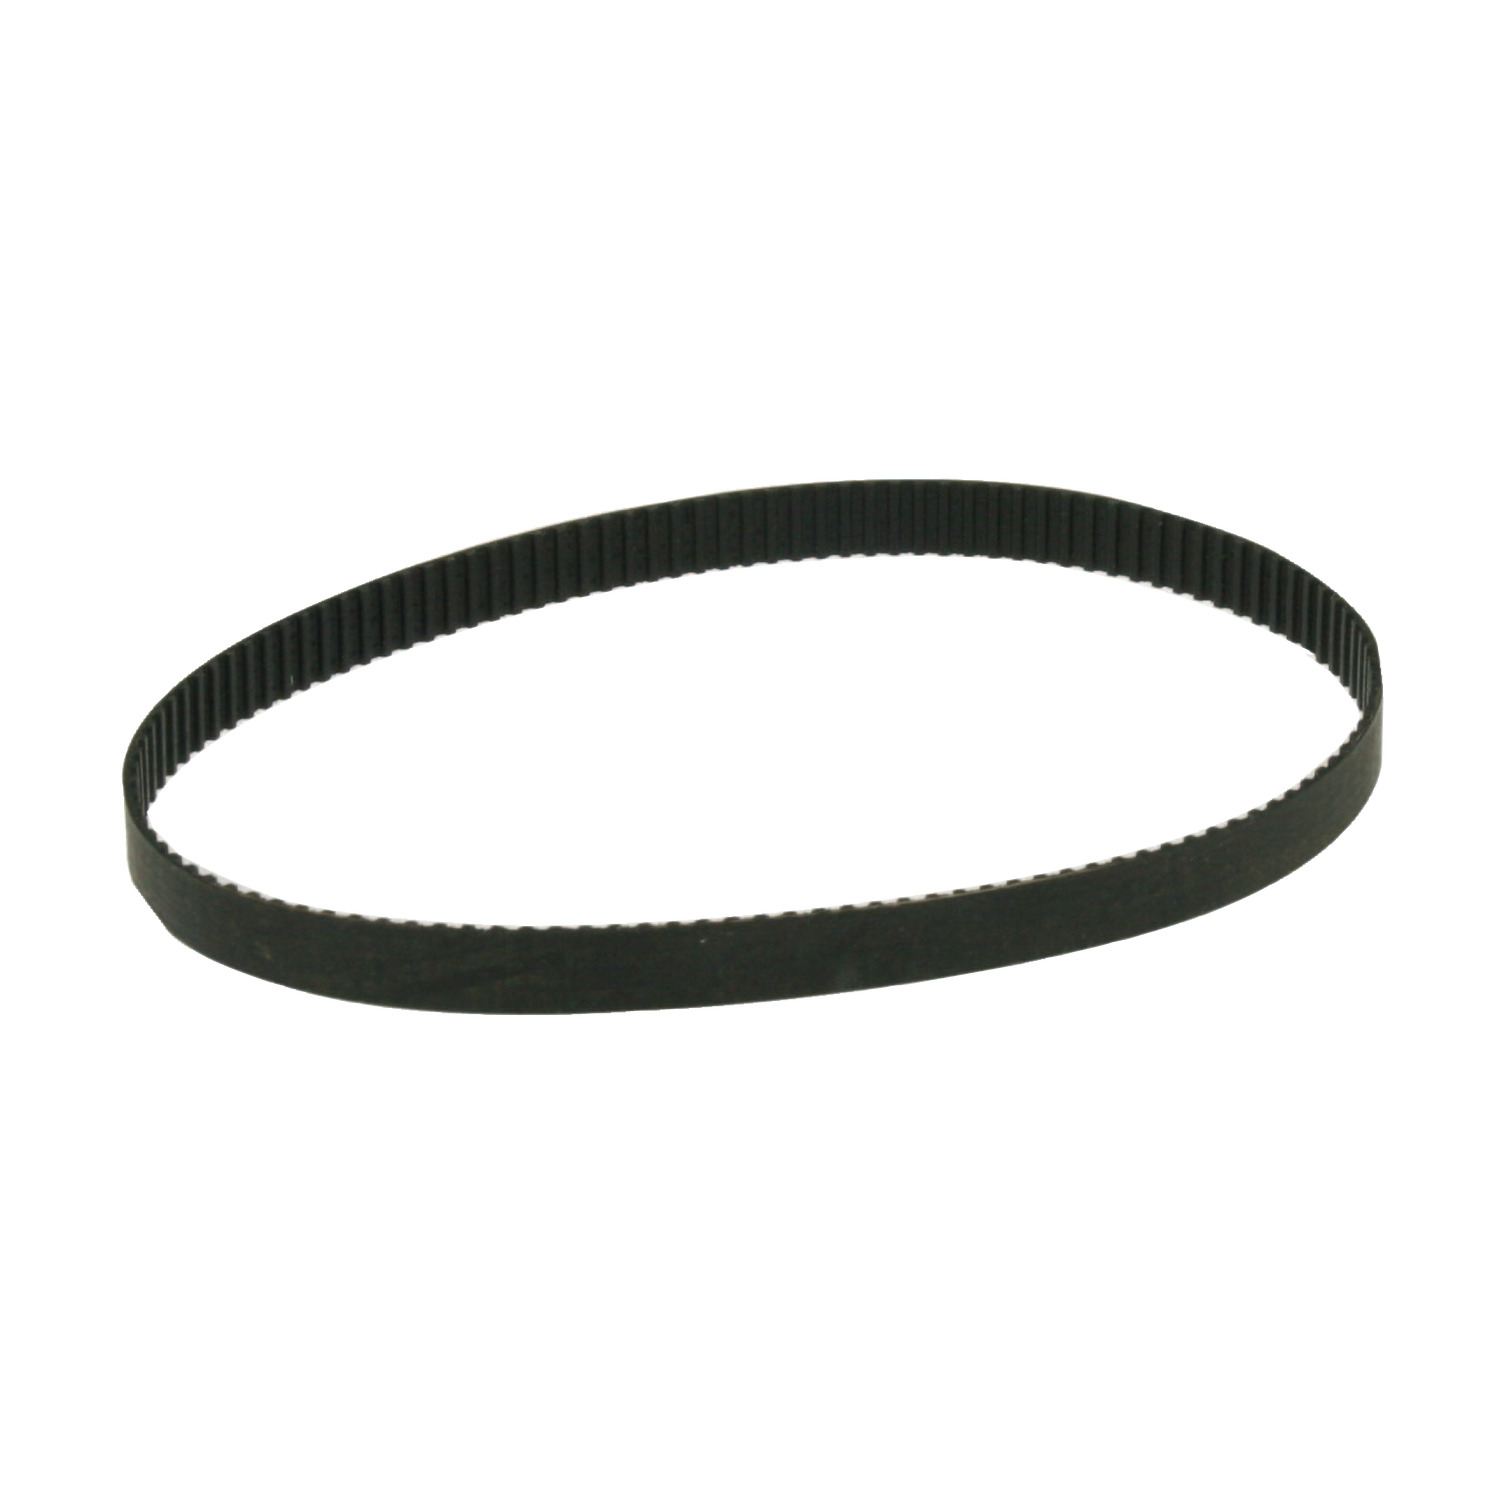 R1430.1 - Timing Belts MXL - 2mm nominal circular pitch